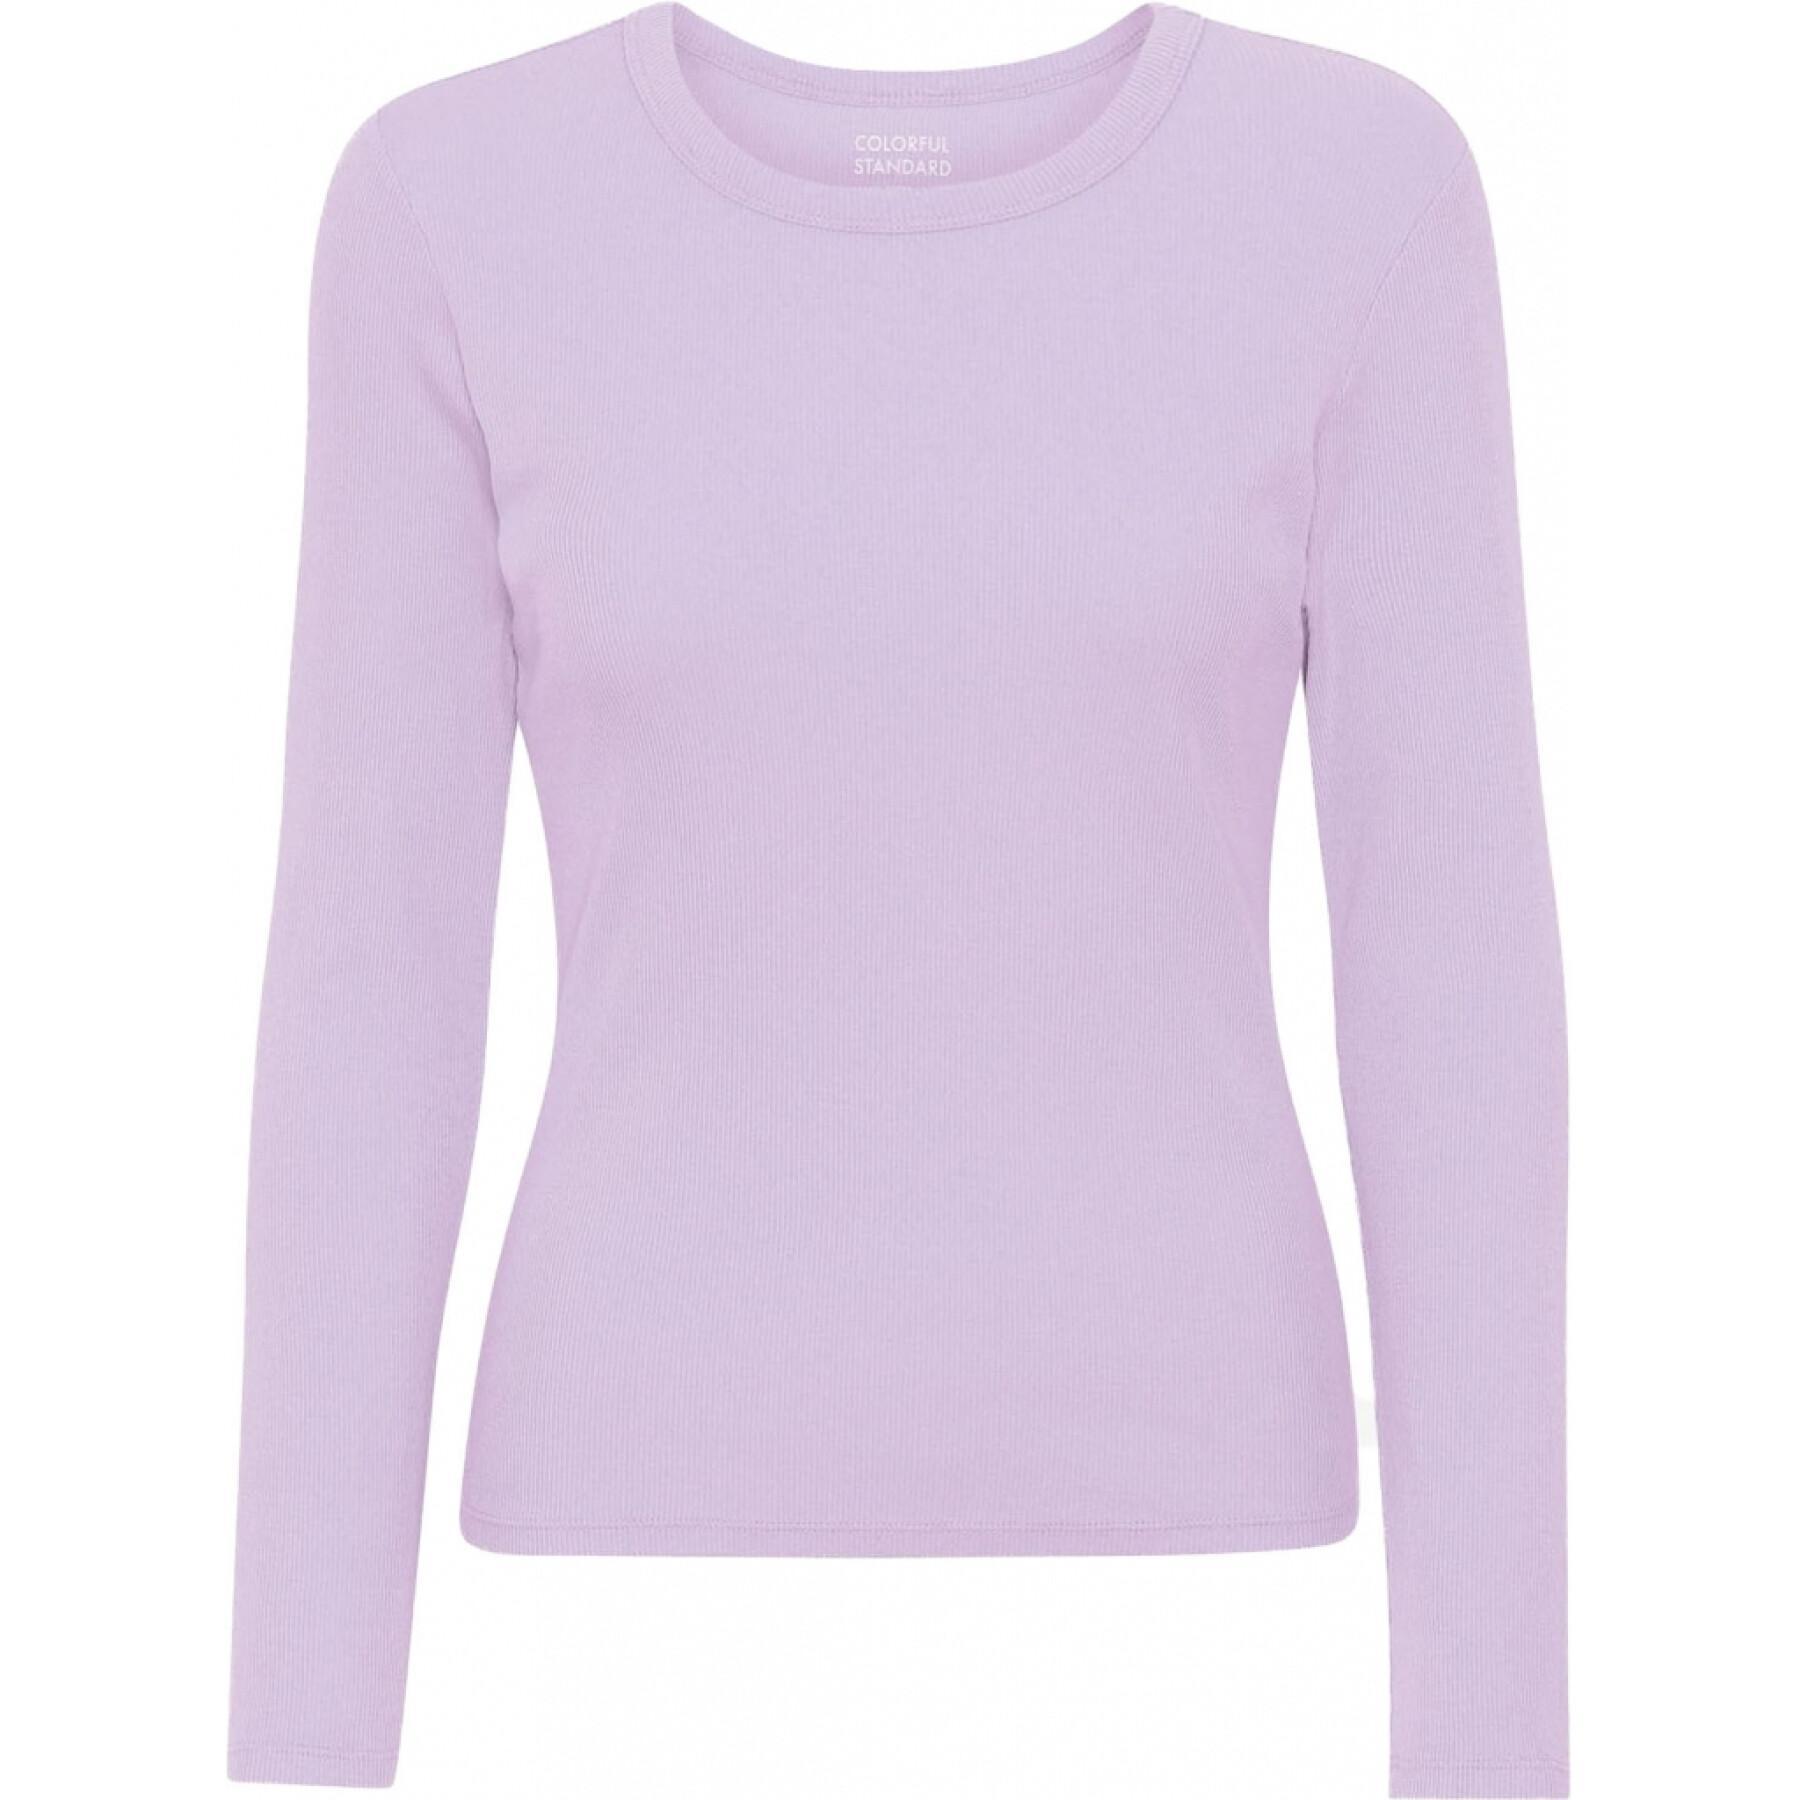 Geripptes T-Shirt mit langen Ärmeln, Frau Colorful Standard Organic soft lavender